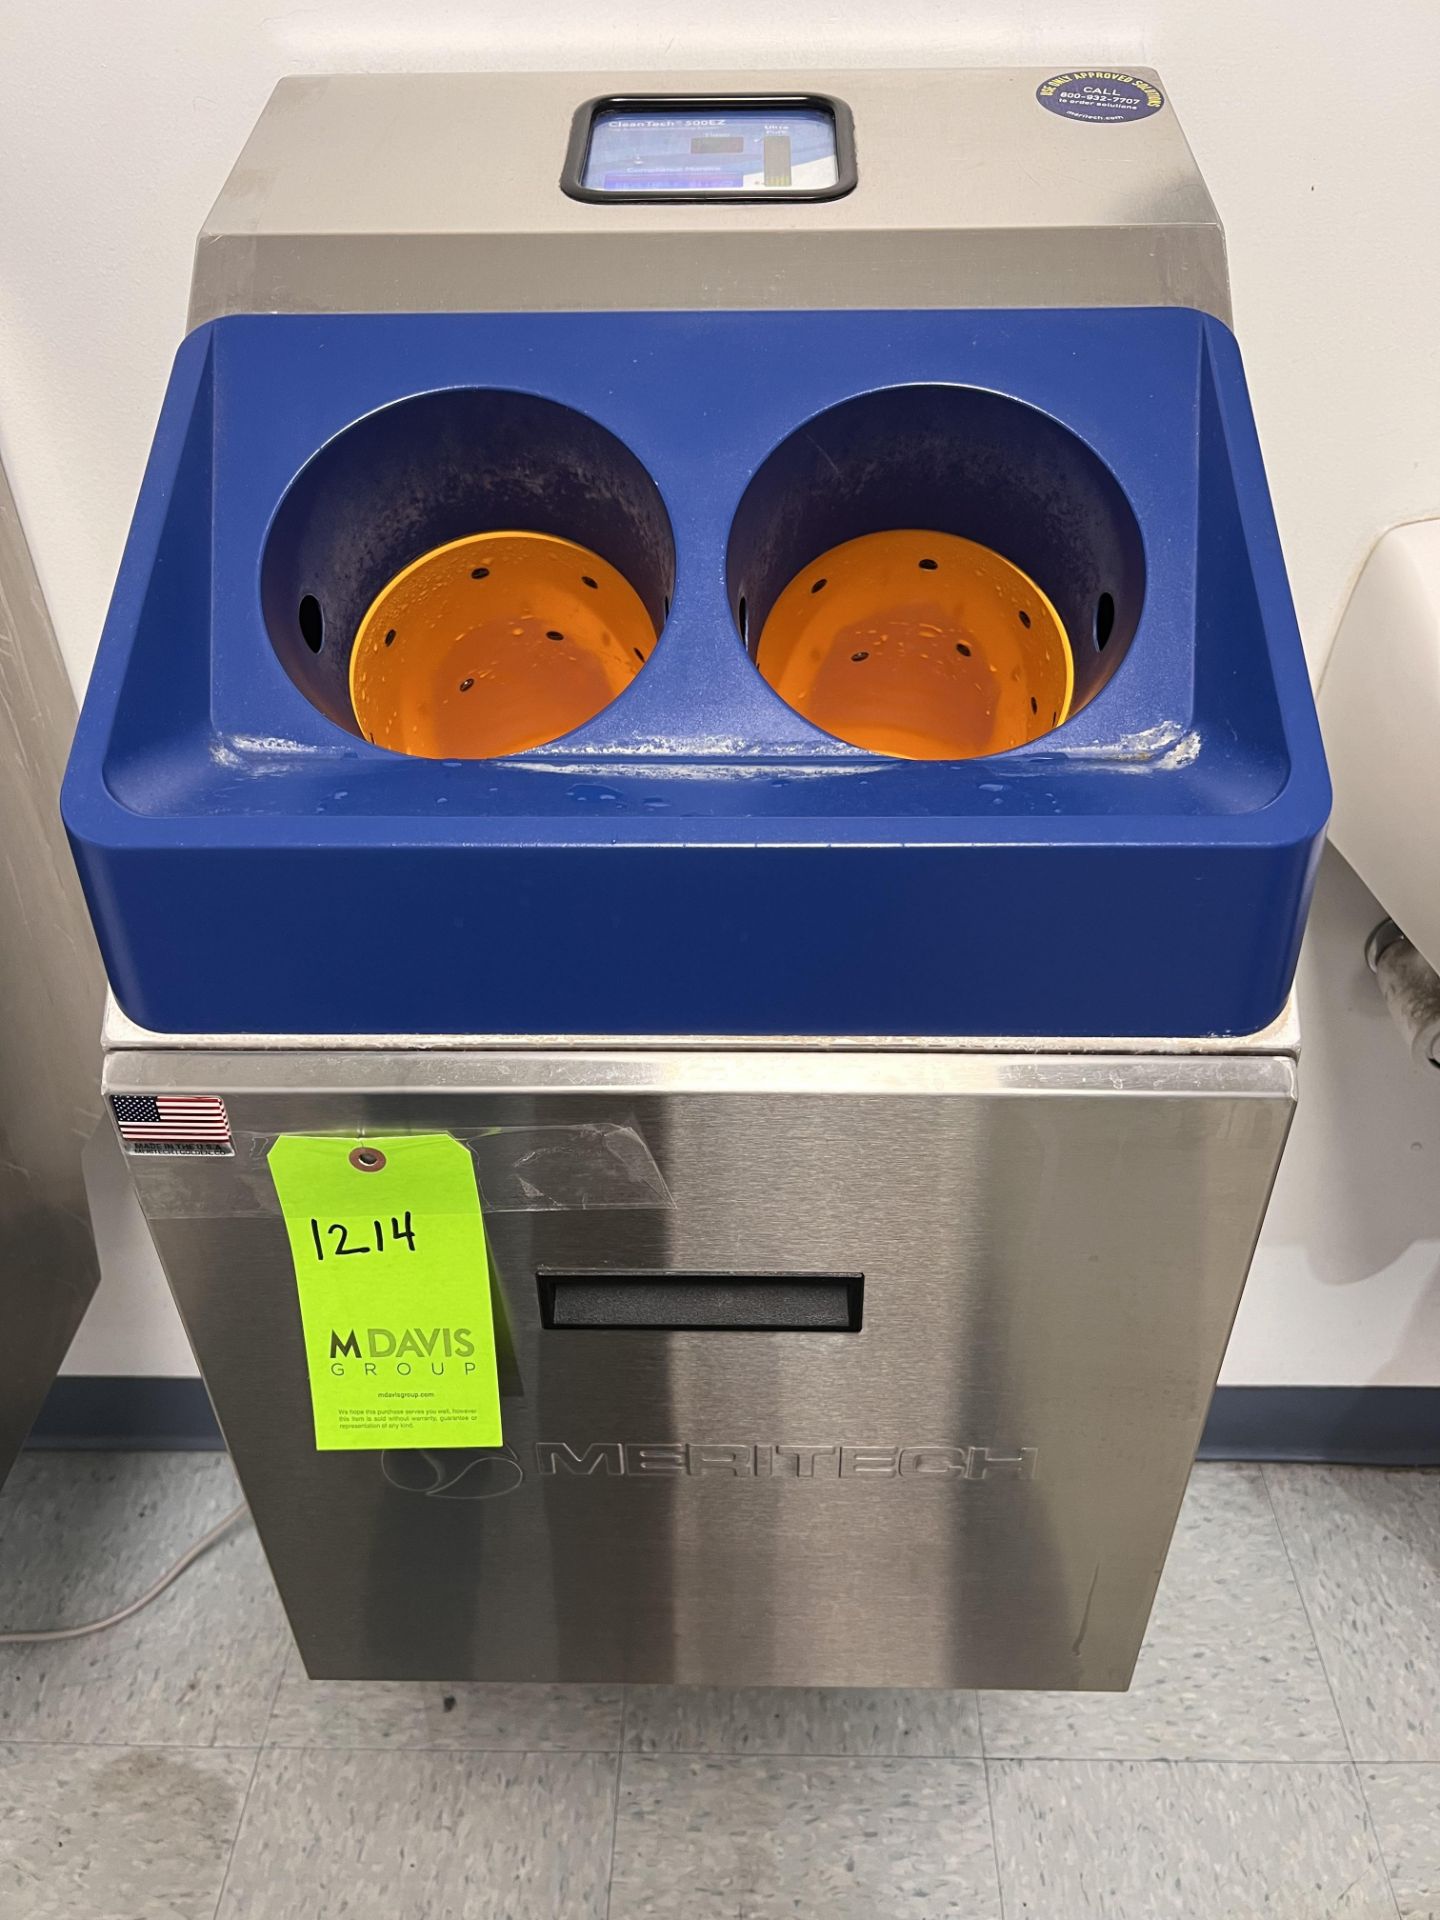 Meritech Automated Handwashing System, Model 500EZ